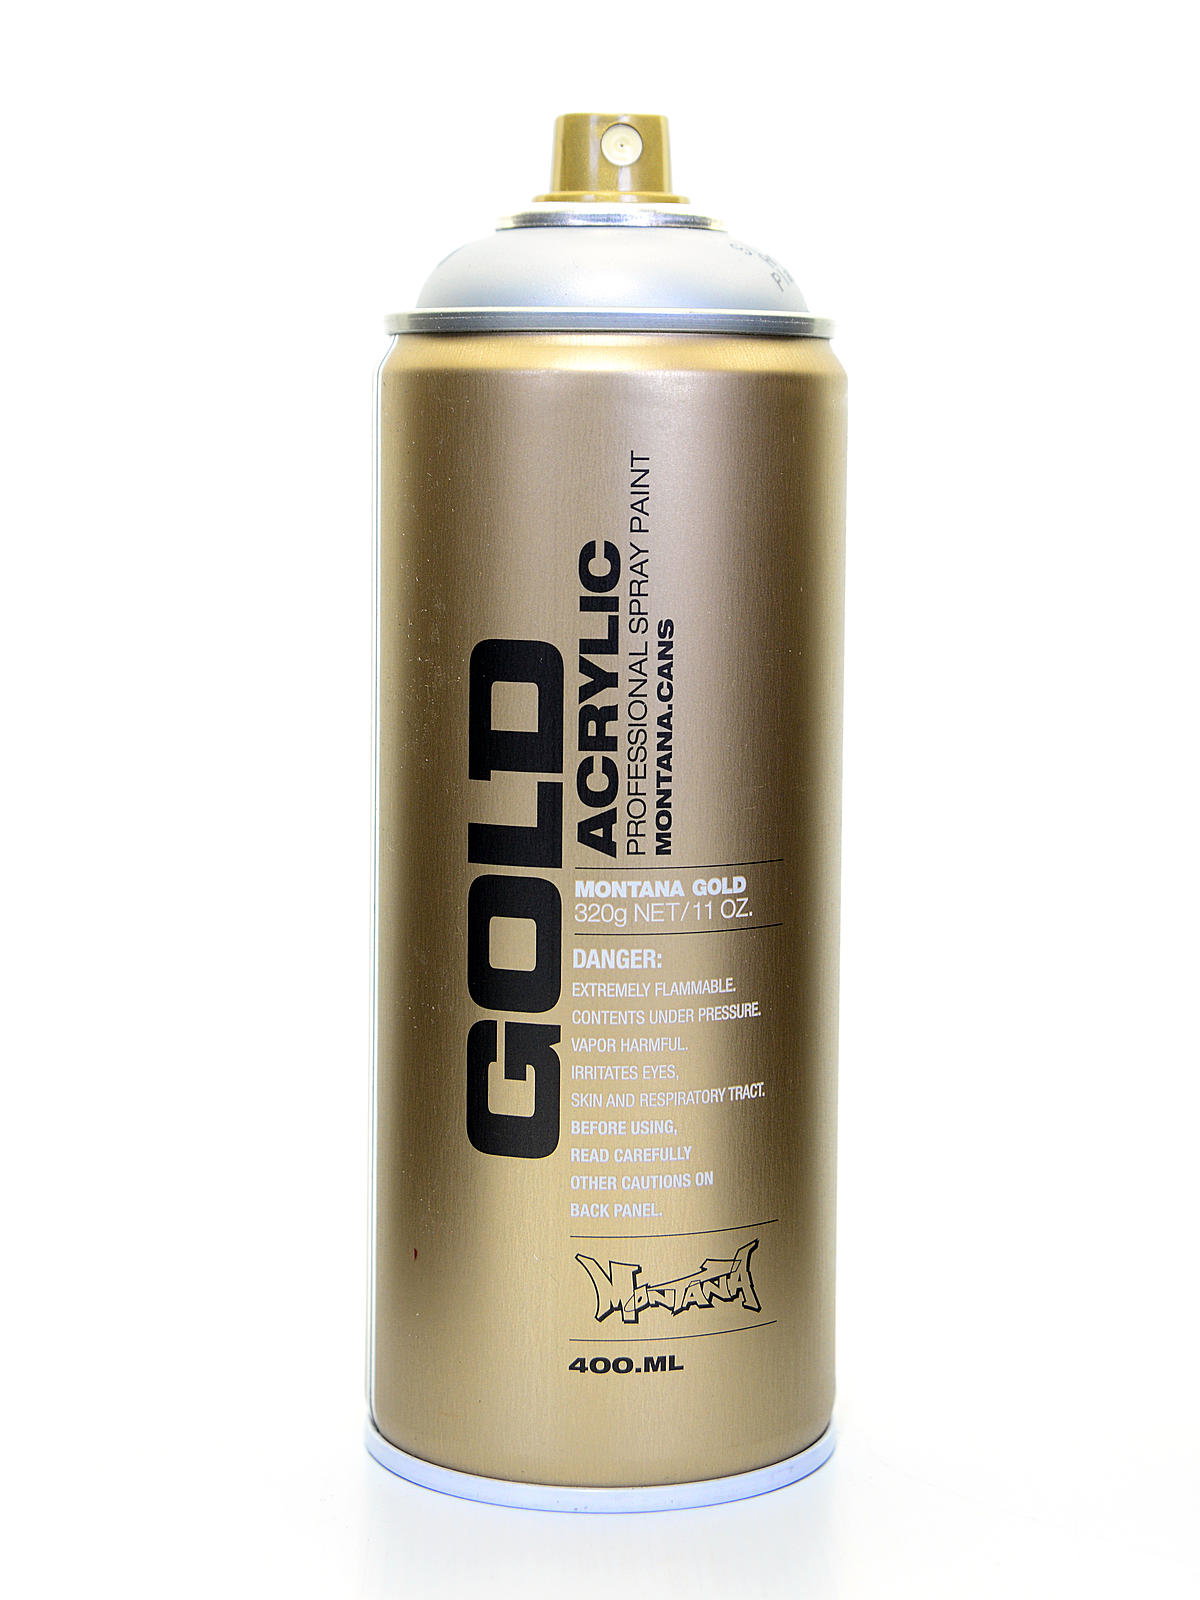 Montana Gold Spray Paint, Metal Primer, 400 ml